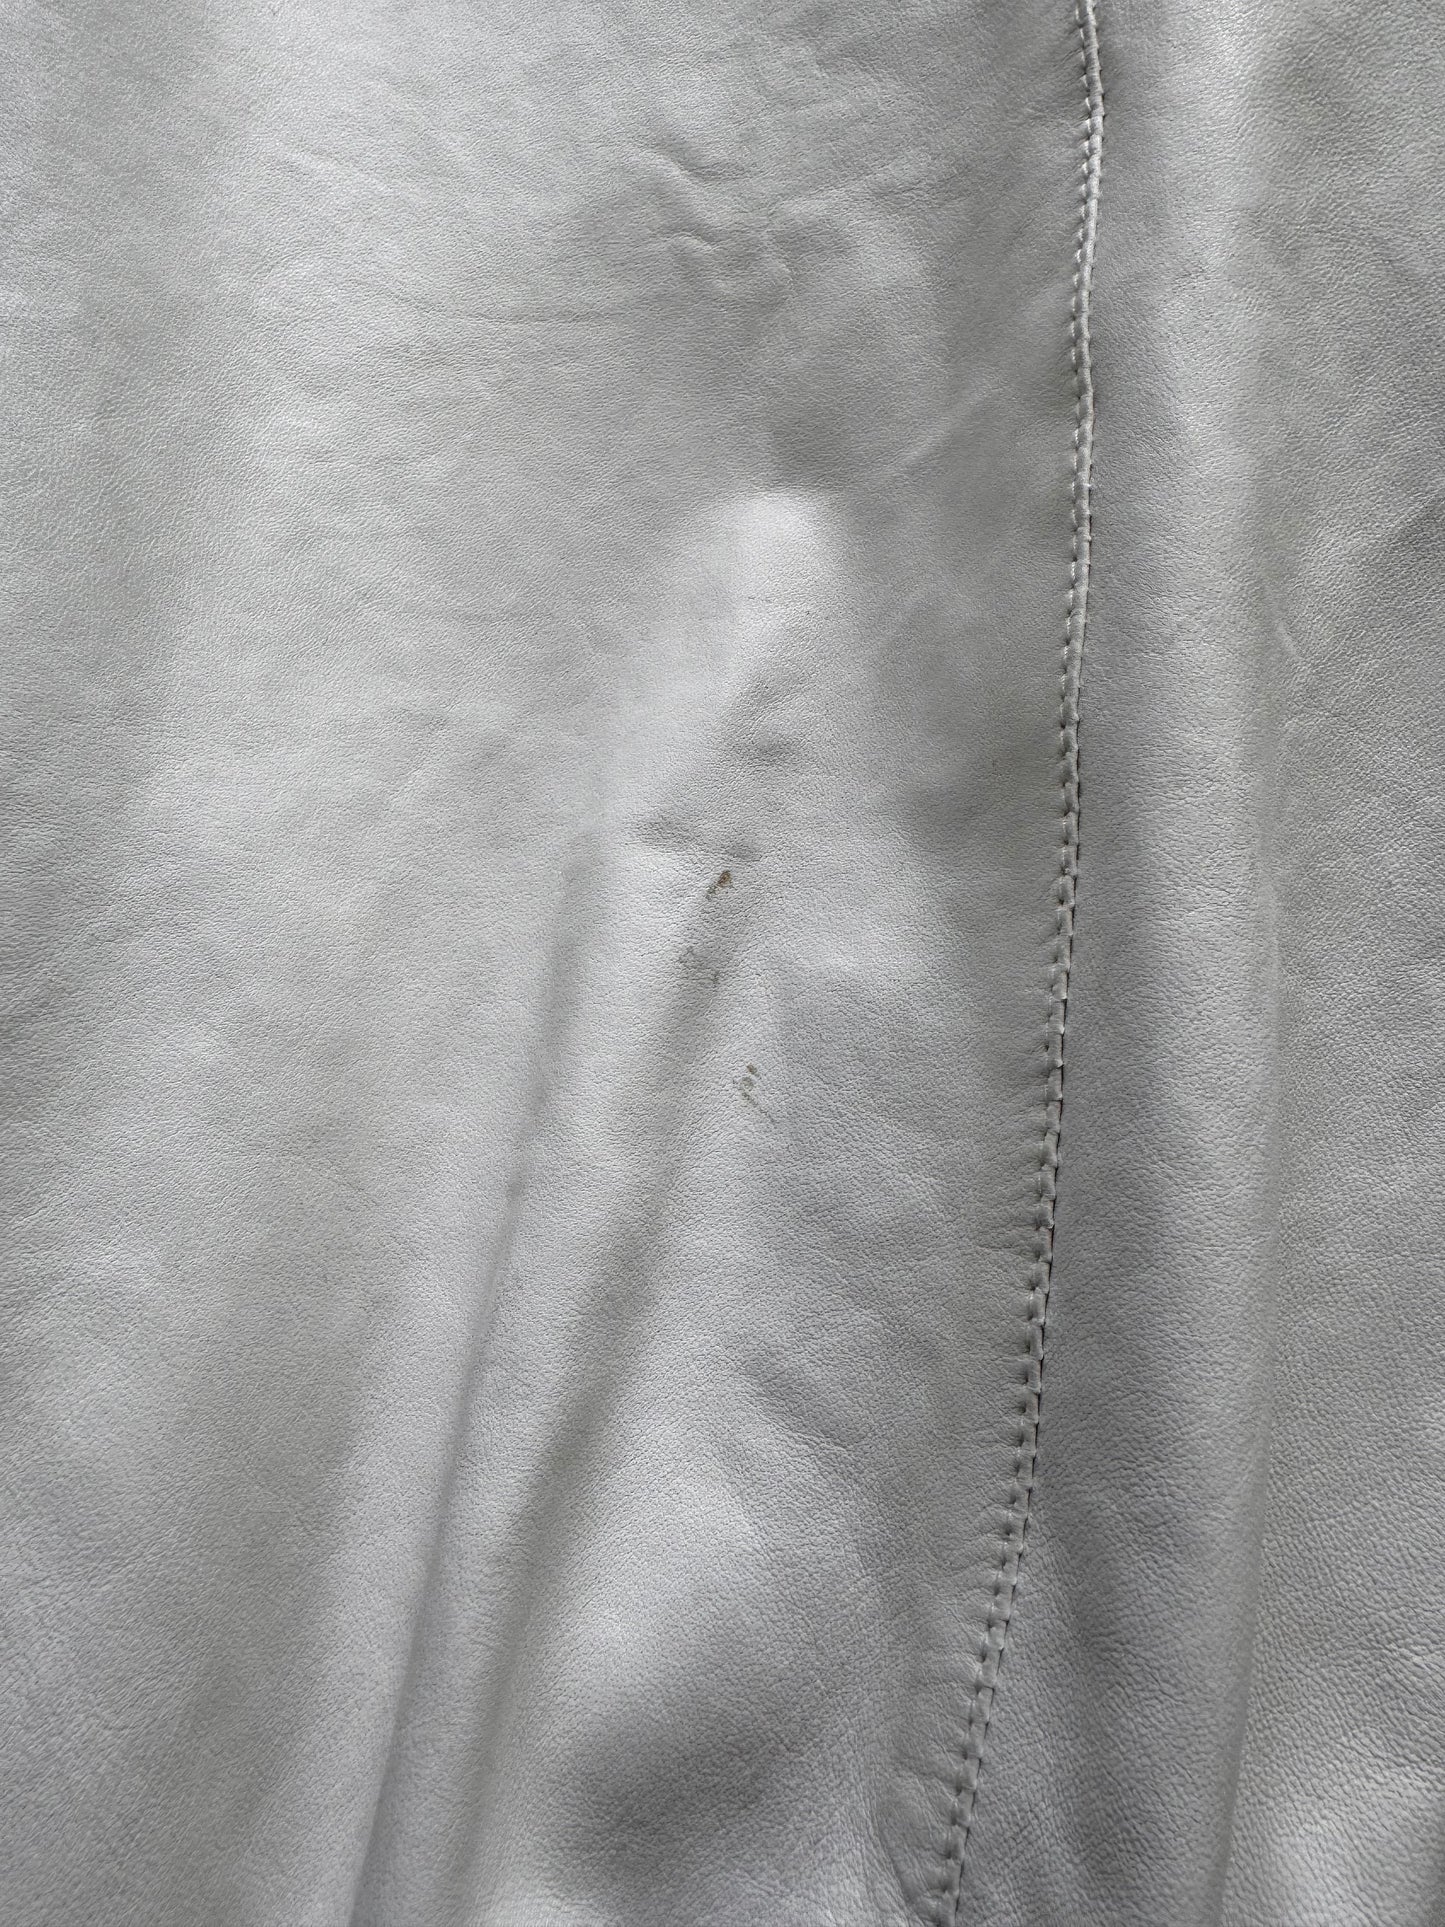 SS2000 Gucci Lambskin Leather Track Jacket (XS)